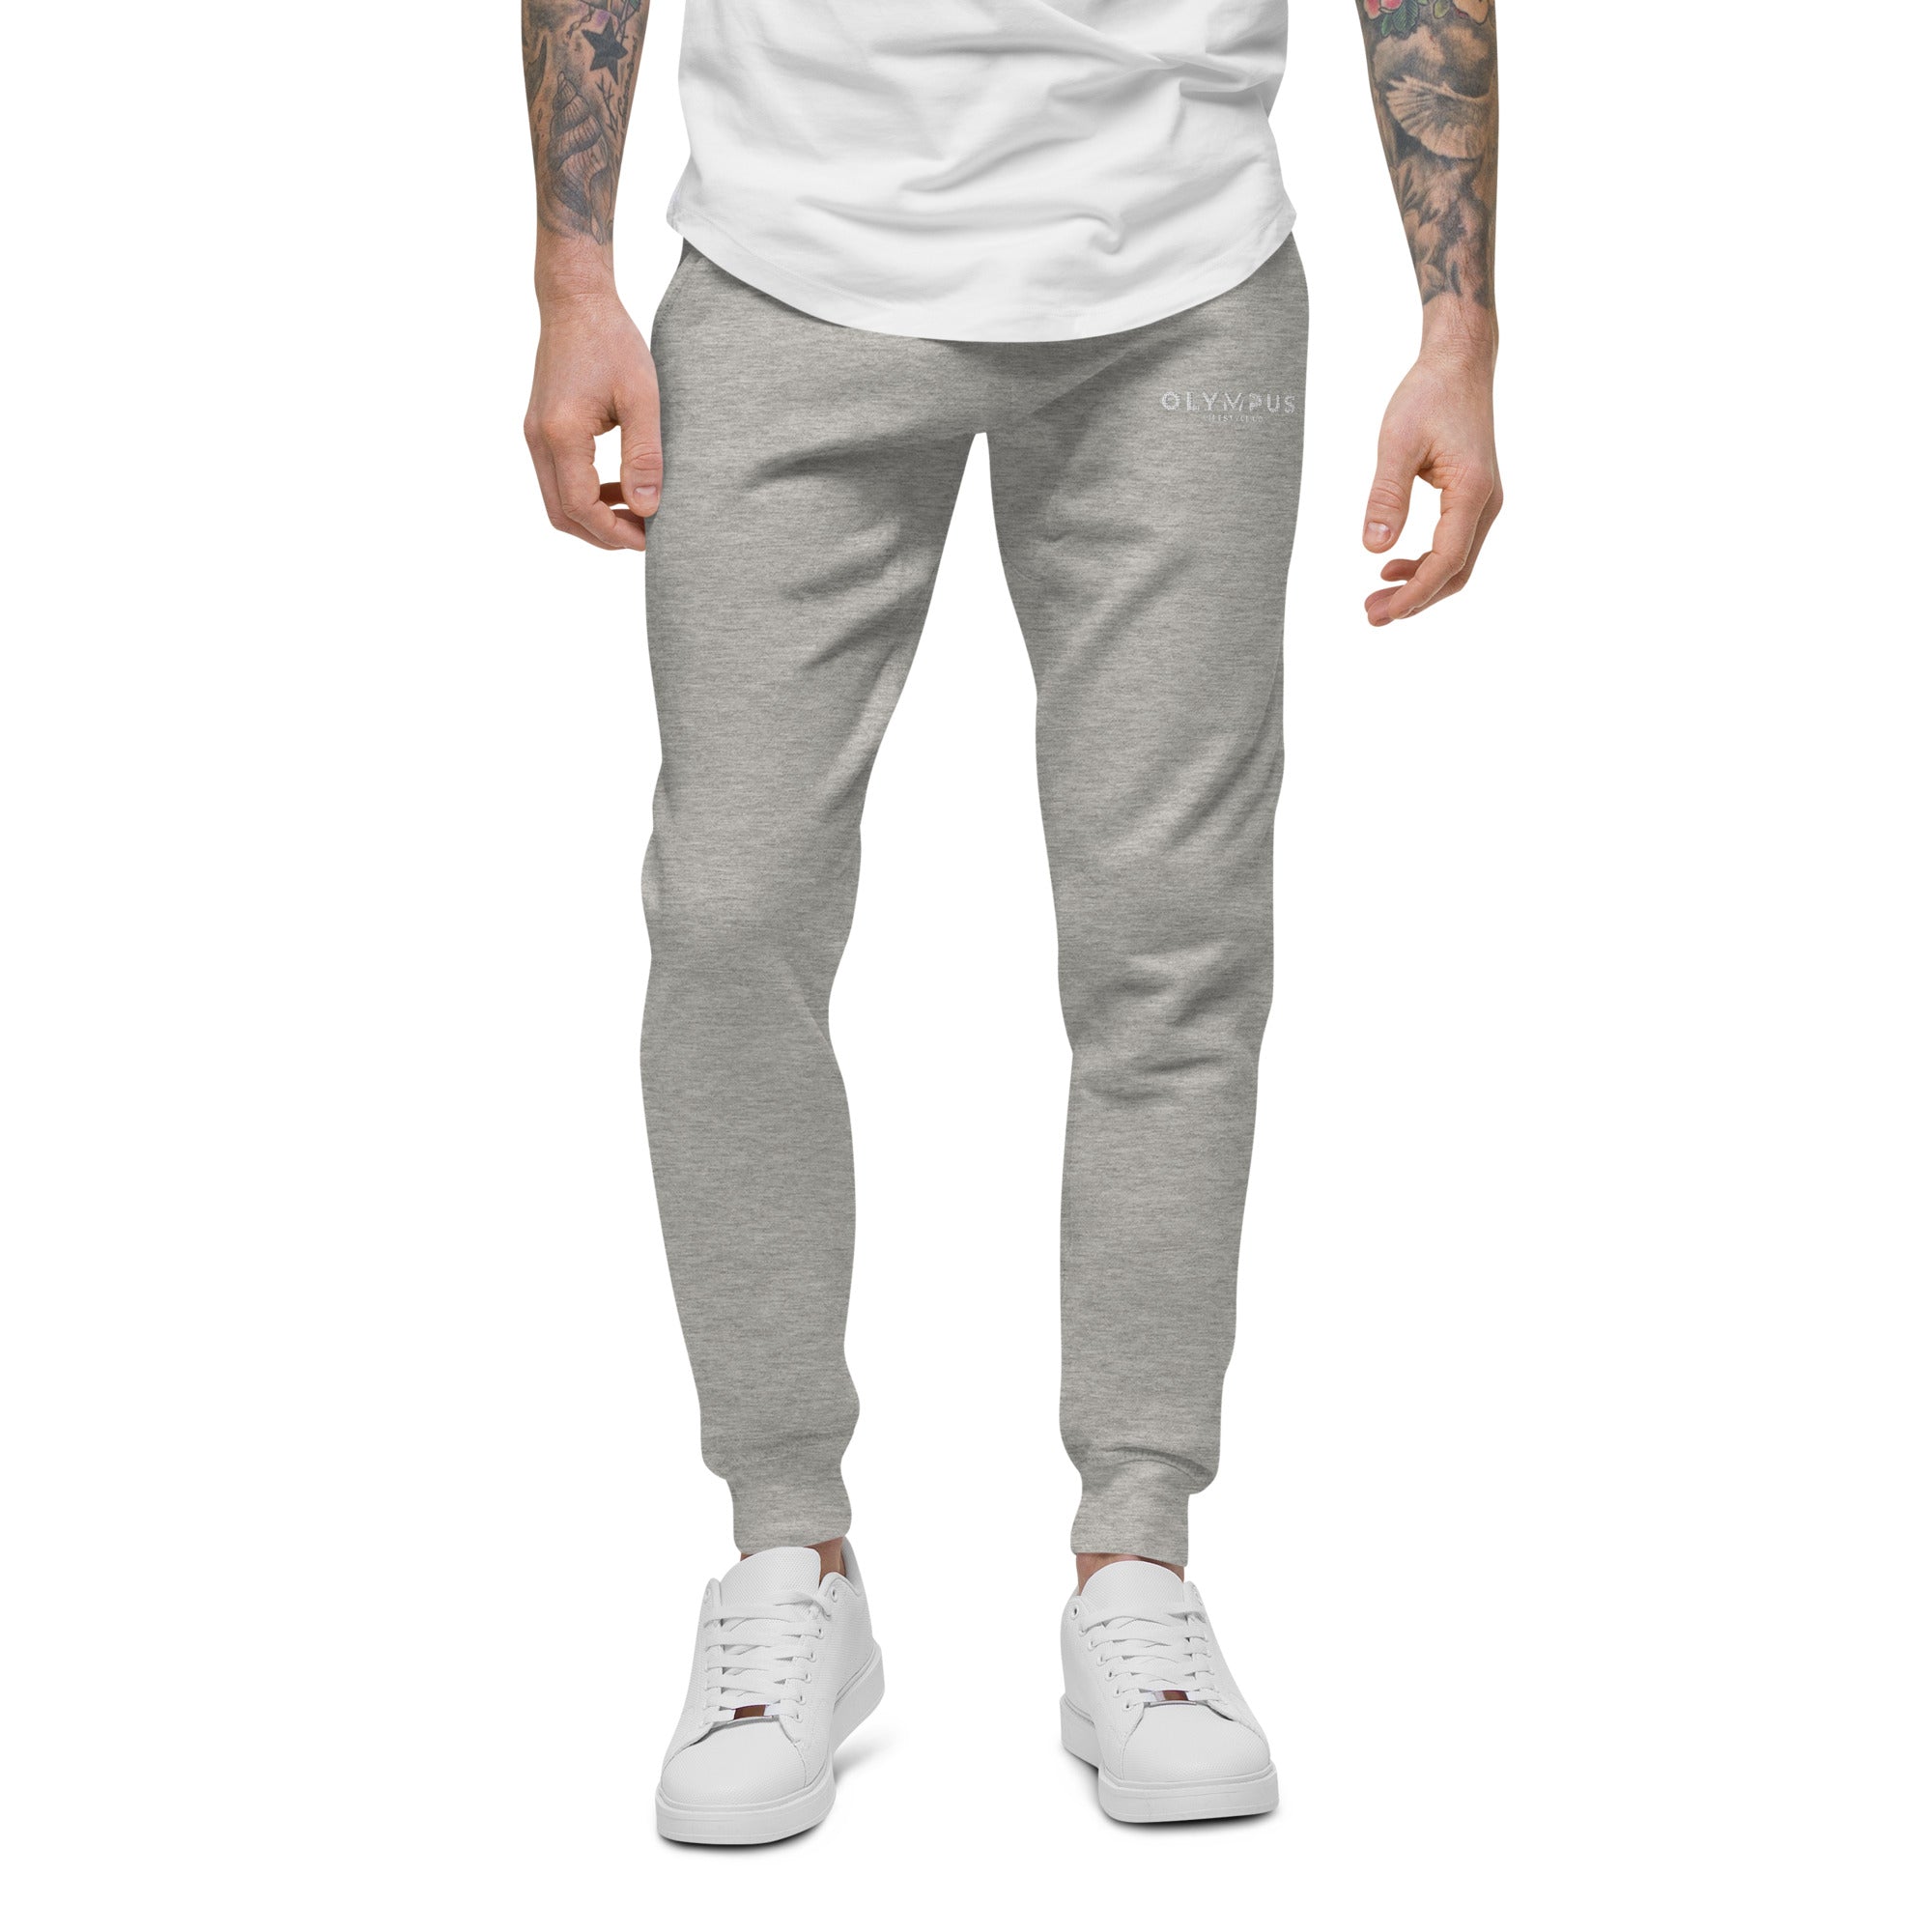 Olympus Men's Grey Fleece Sweatpants White Text Logo